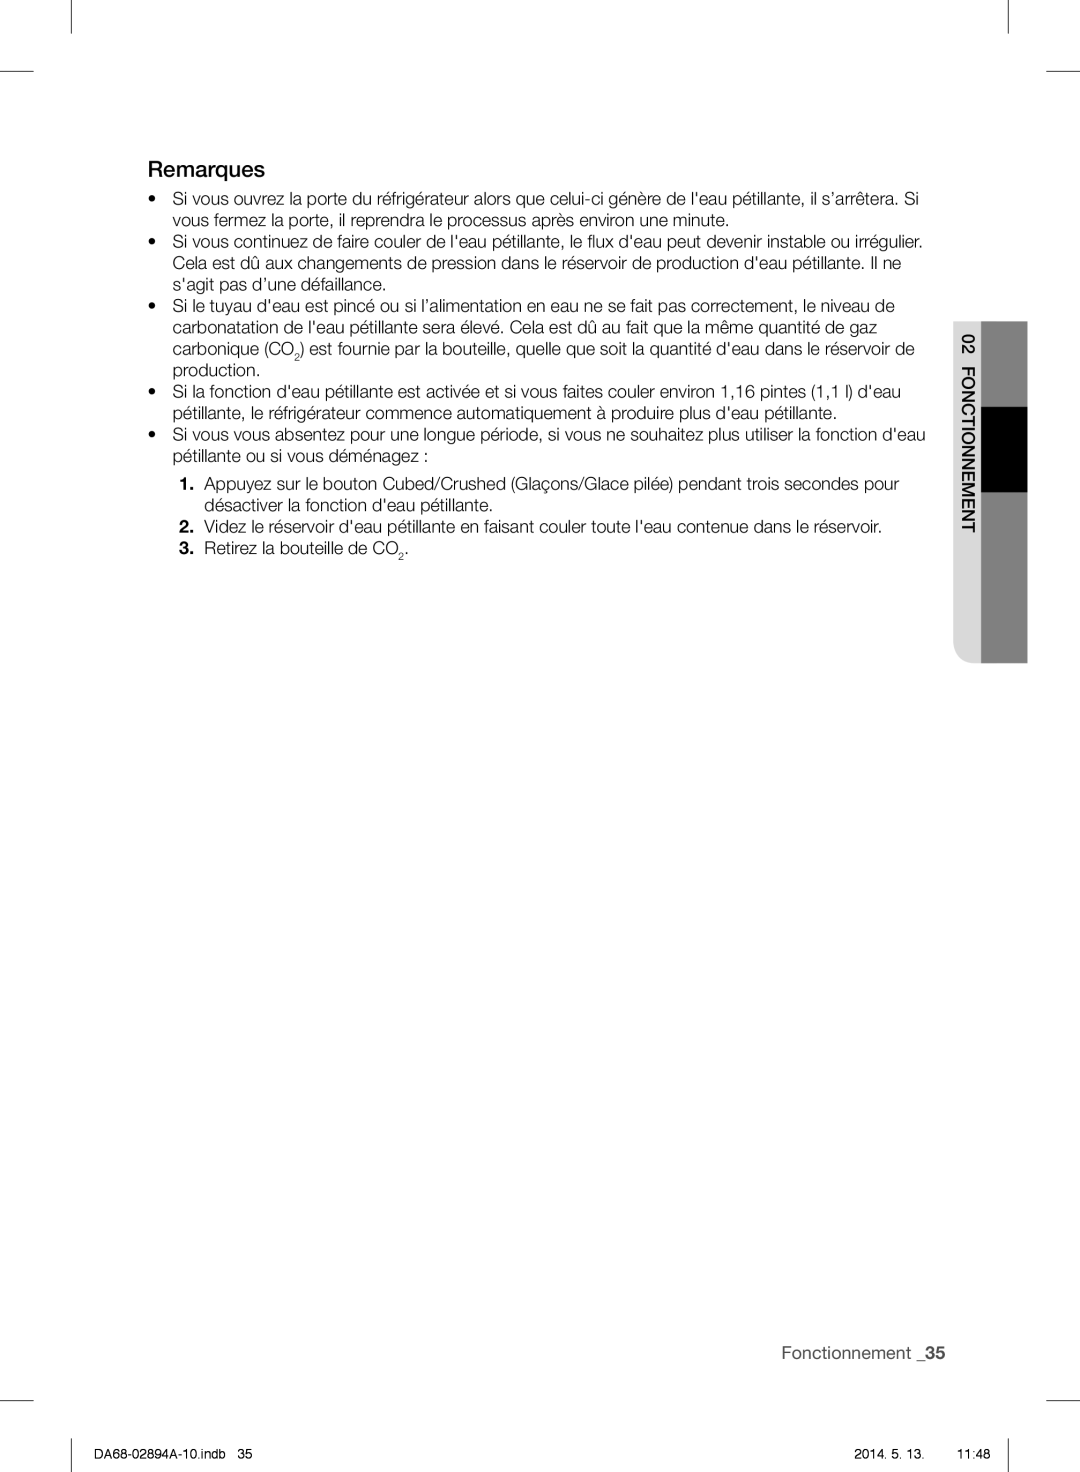 Samsung RF31FMESBSR user manual Remarques, Fonctionnement _35 